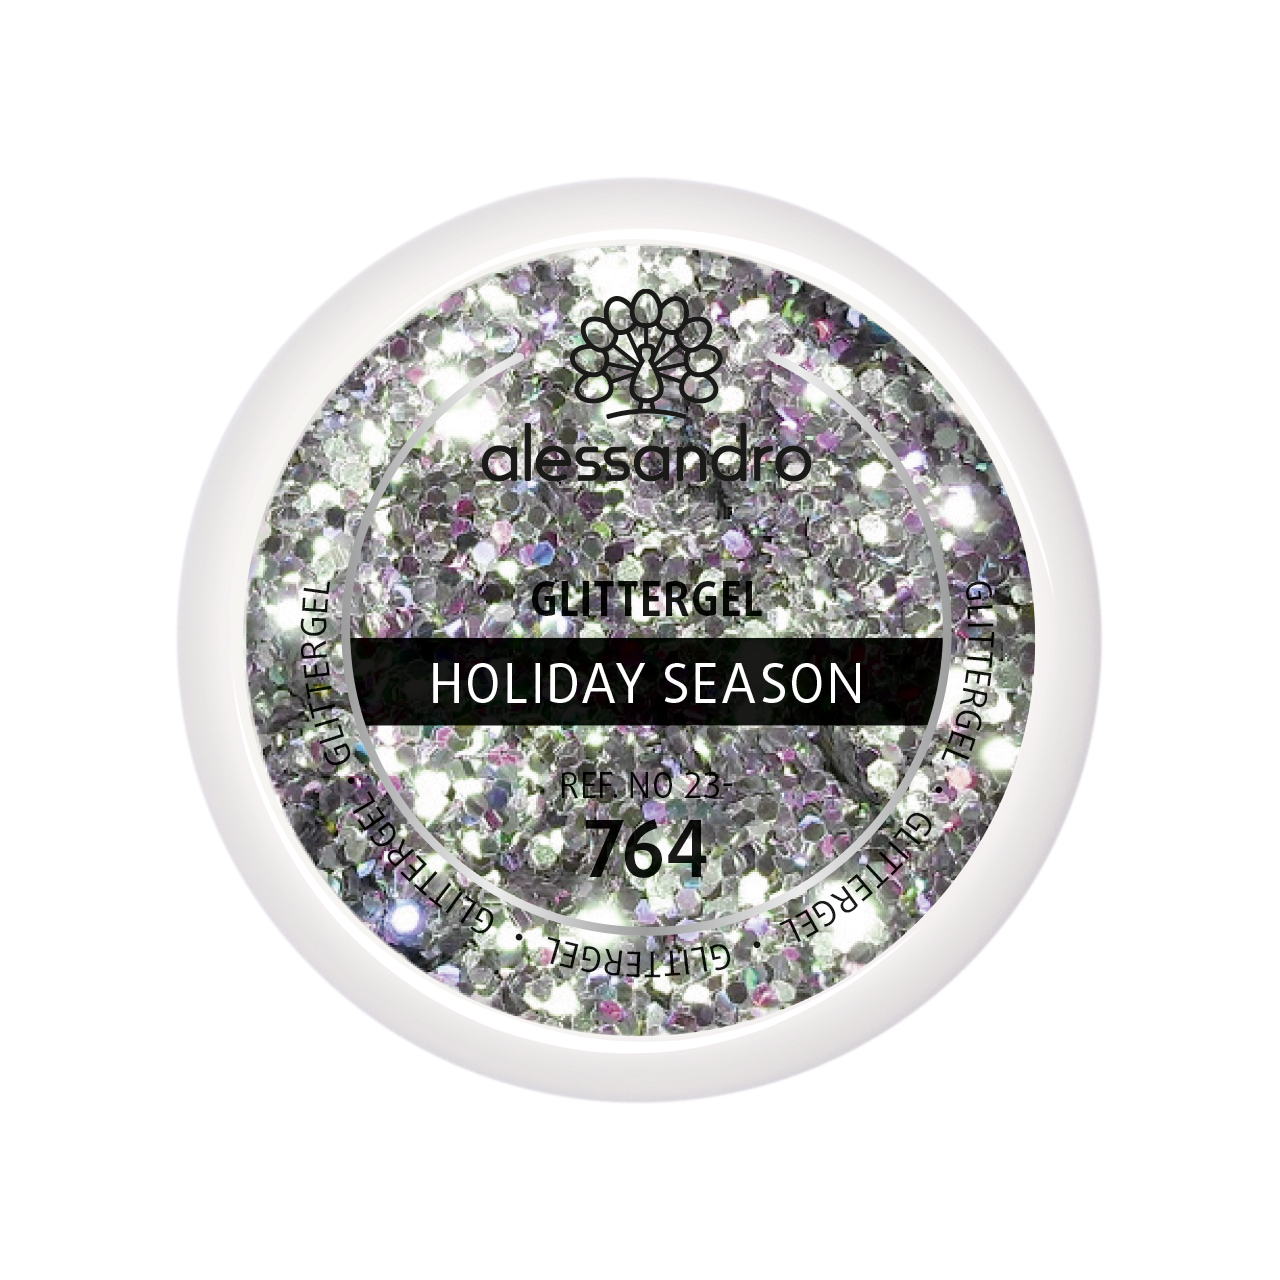 Glittergel Holiday Season 5 g